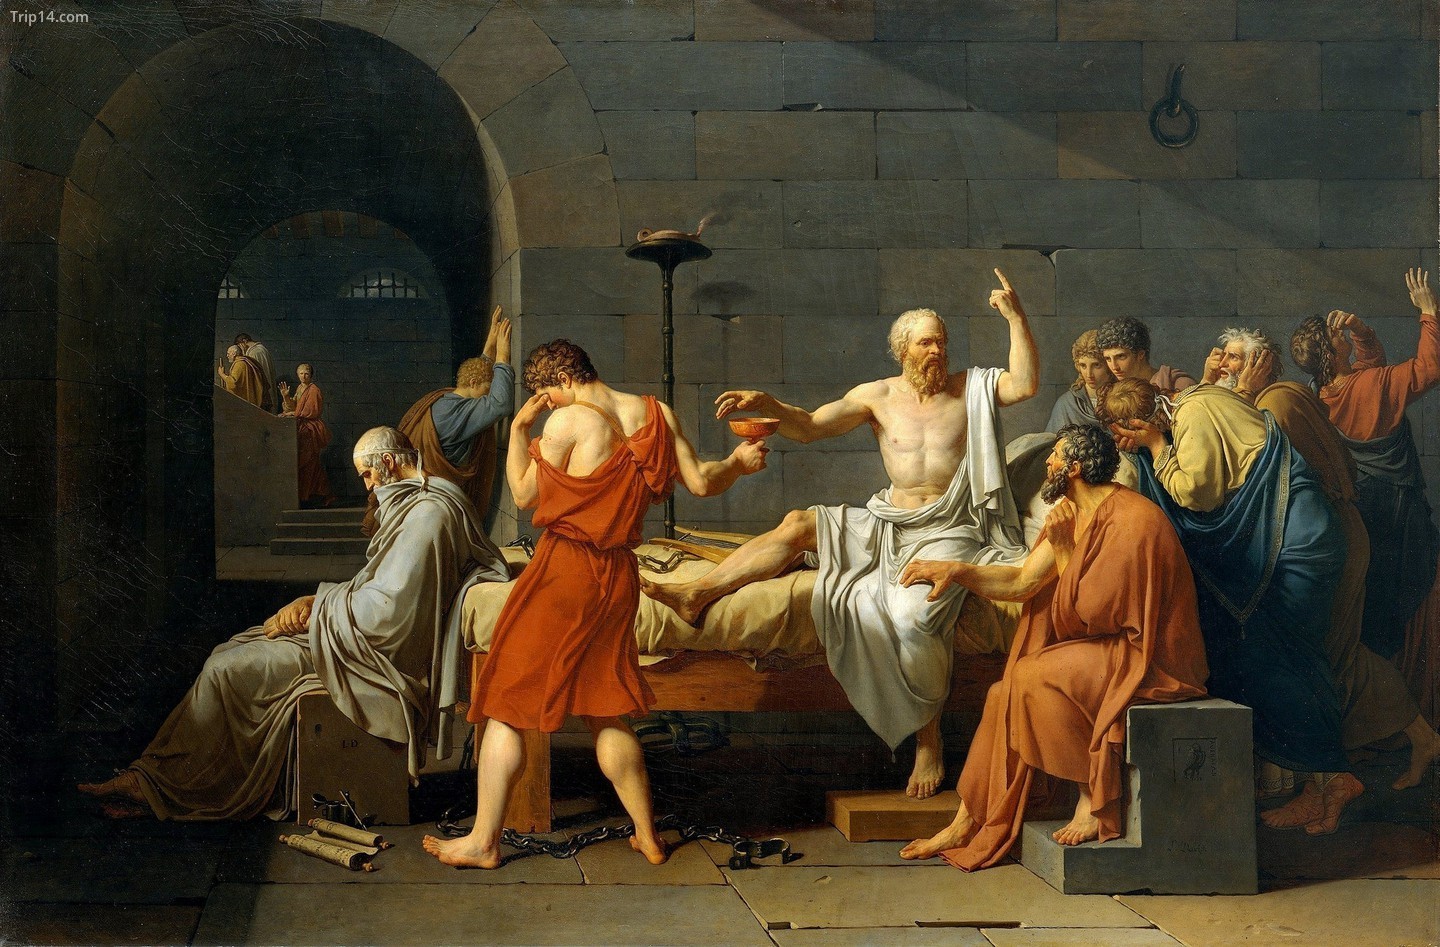  David, Cái chết của Socrates, 1787   |   